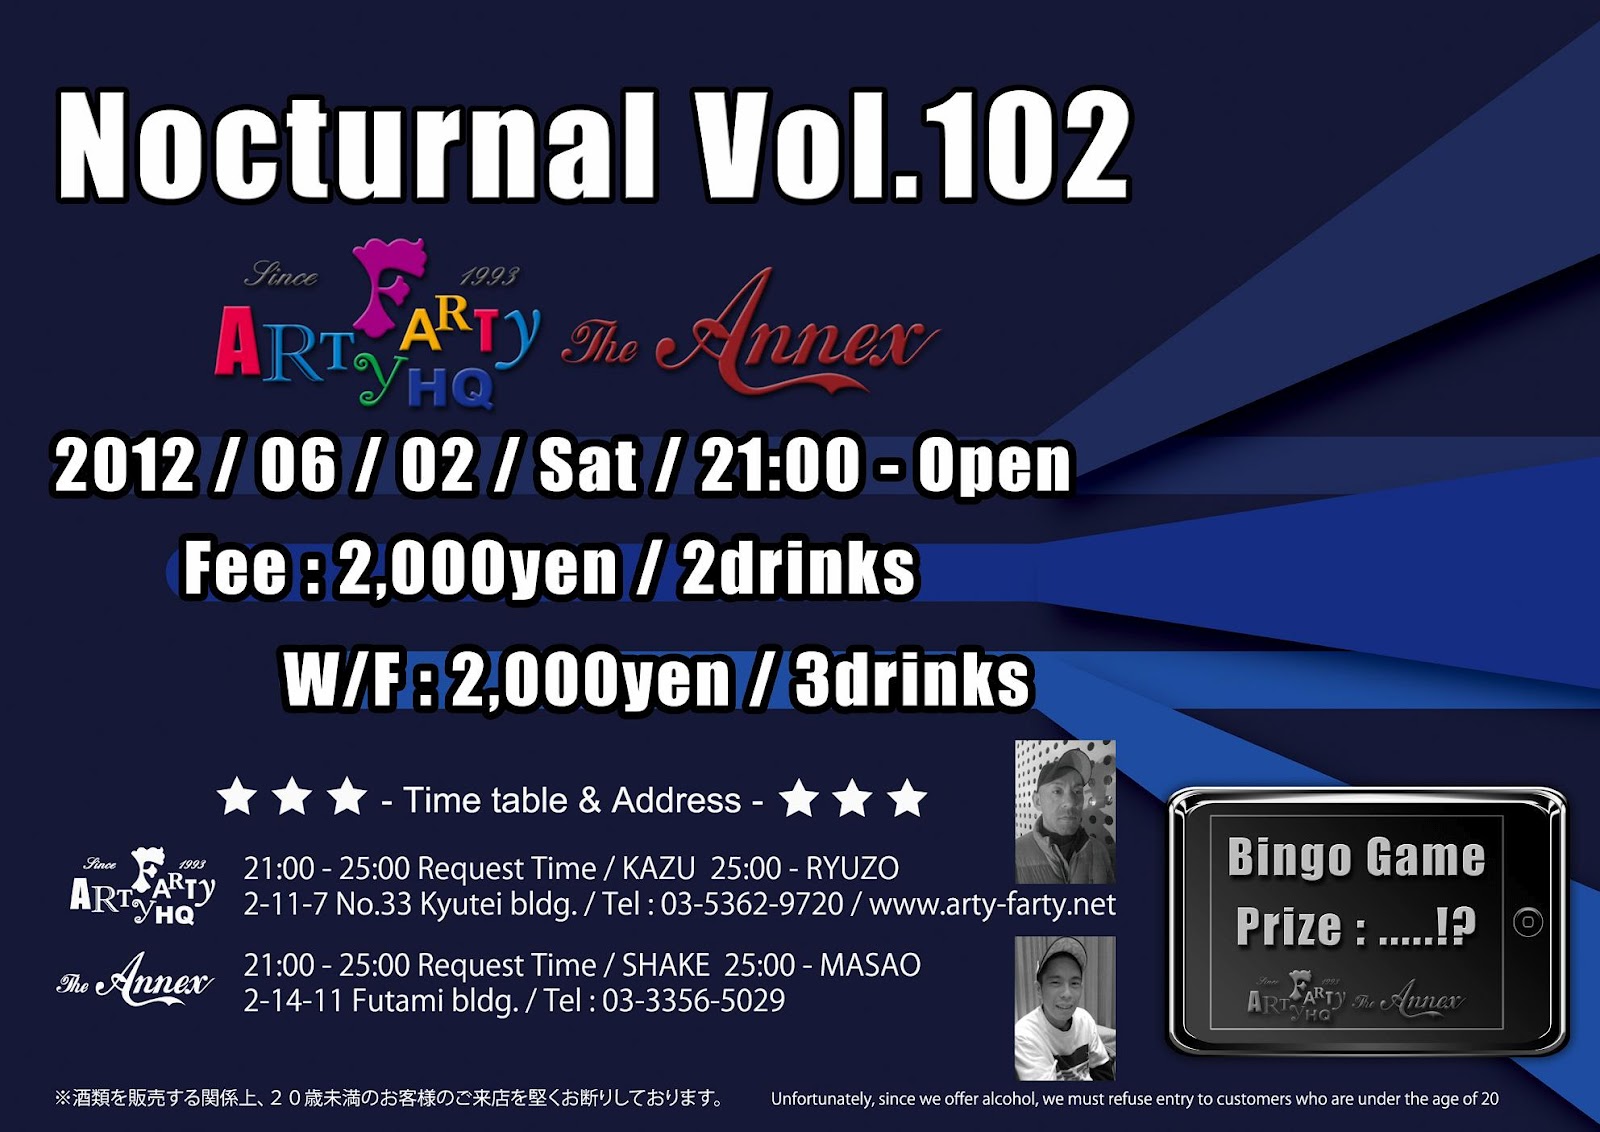 Nocturnal Vol.102  2012/06/02  - 1600x1132 278.5kb